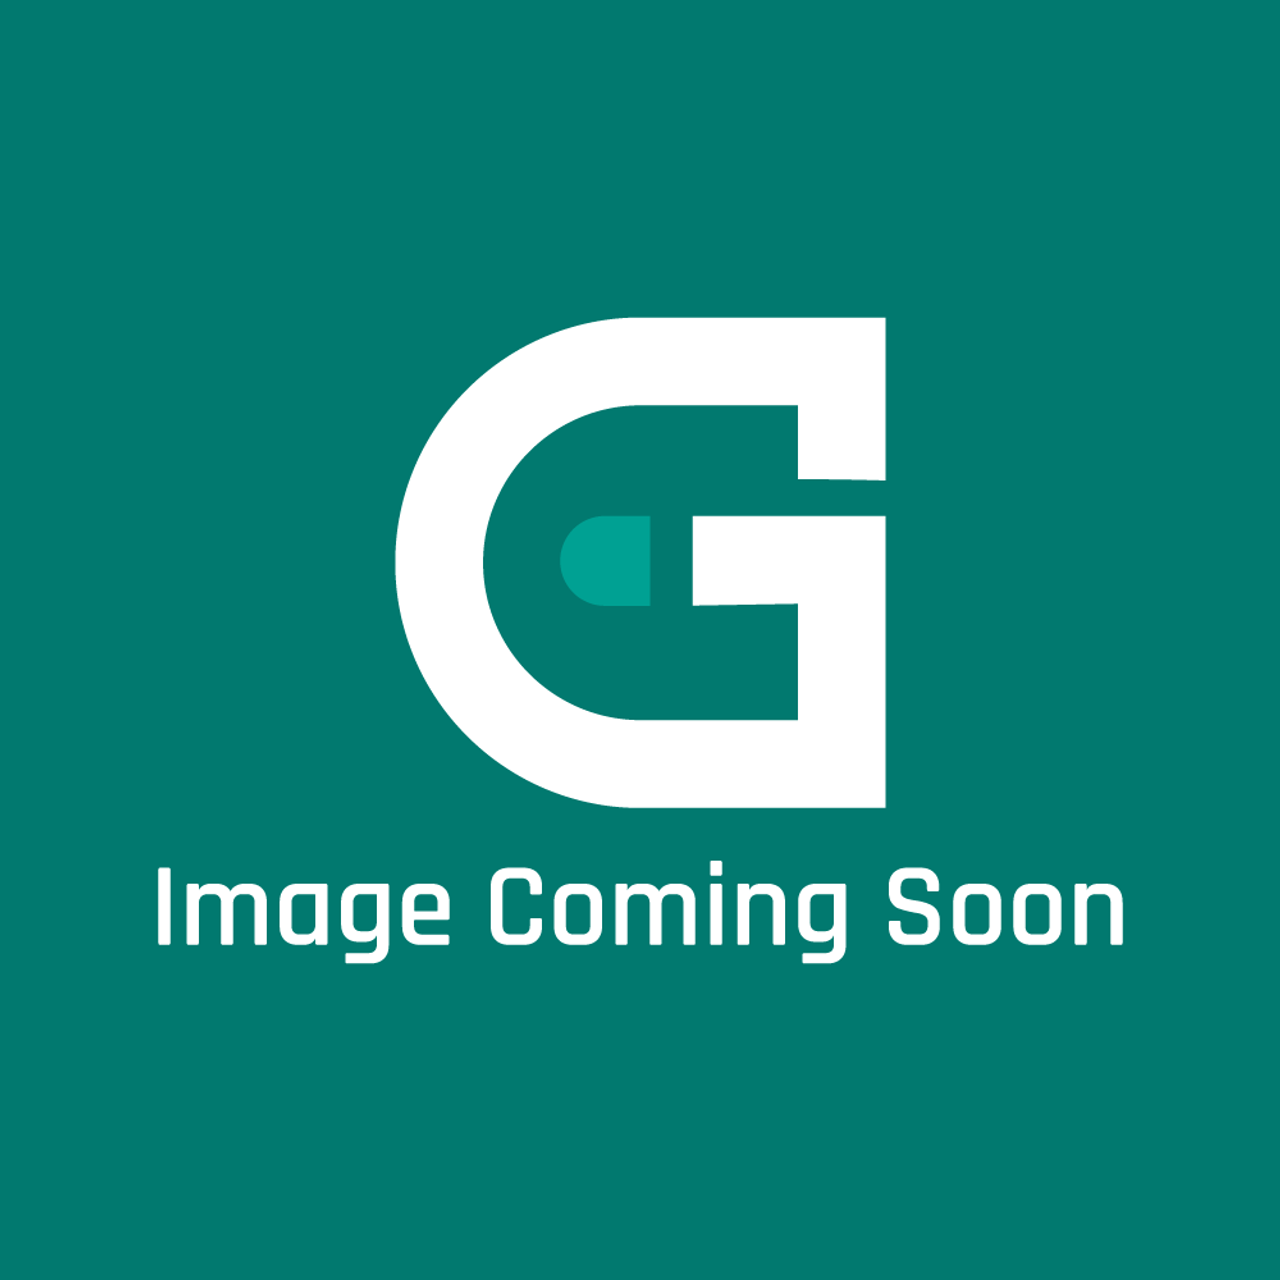 AGA Marvel S31580-037 - Gasket Black-24Ad Articulated Hinge - Image Coming Soon!